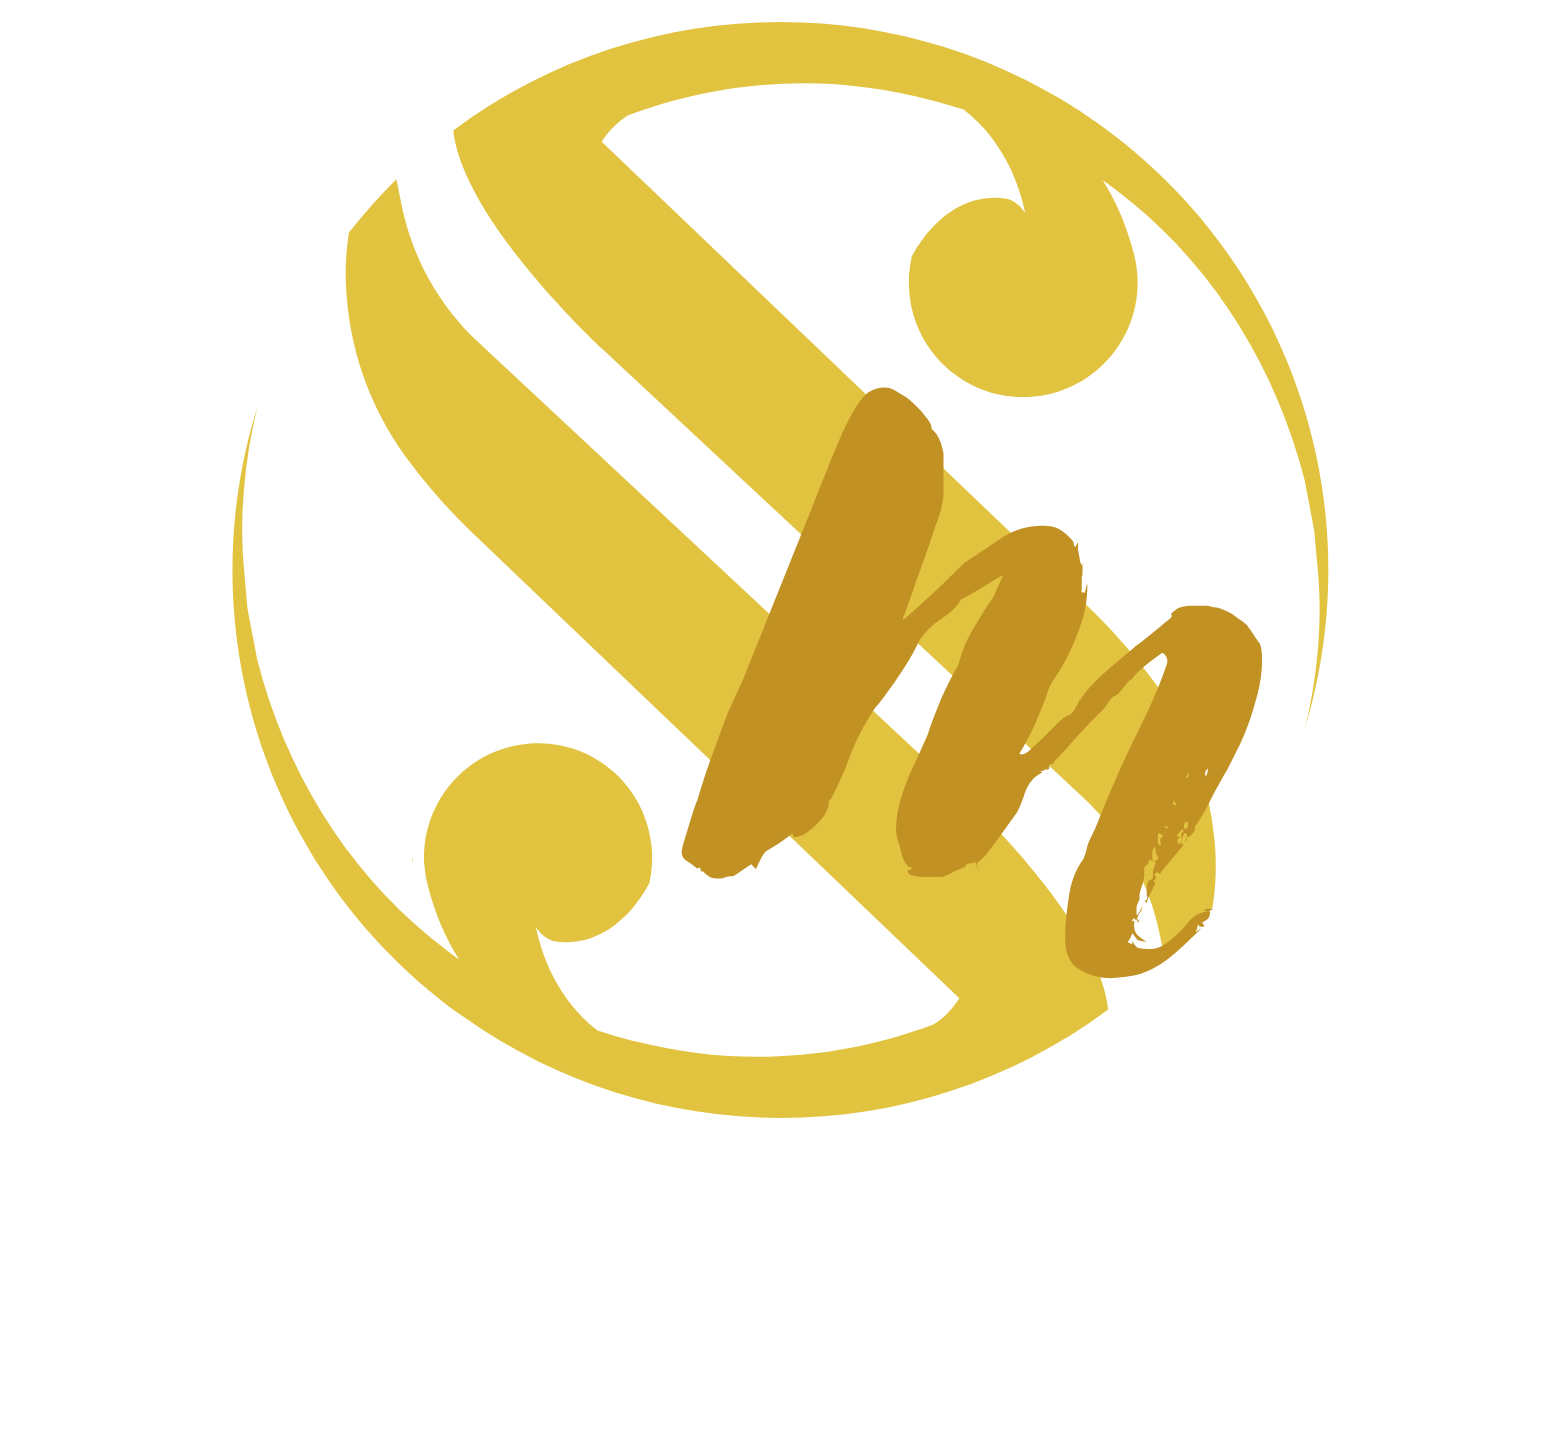 Juridik Sarah Mingert